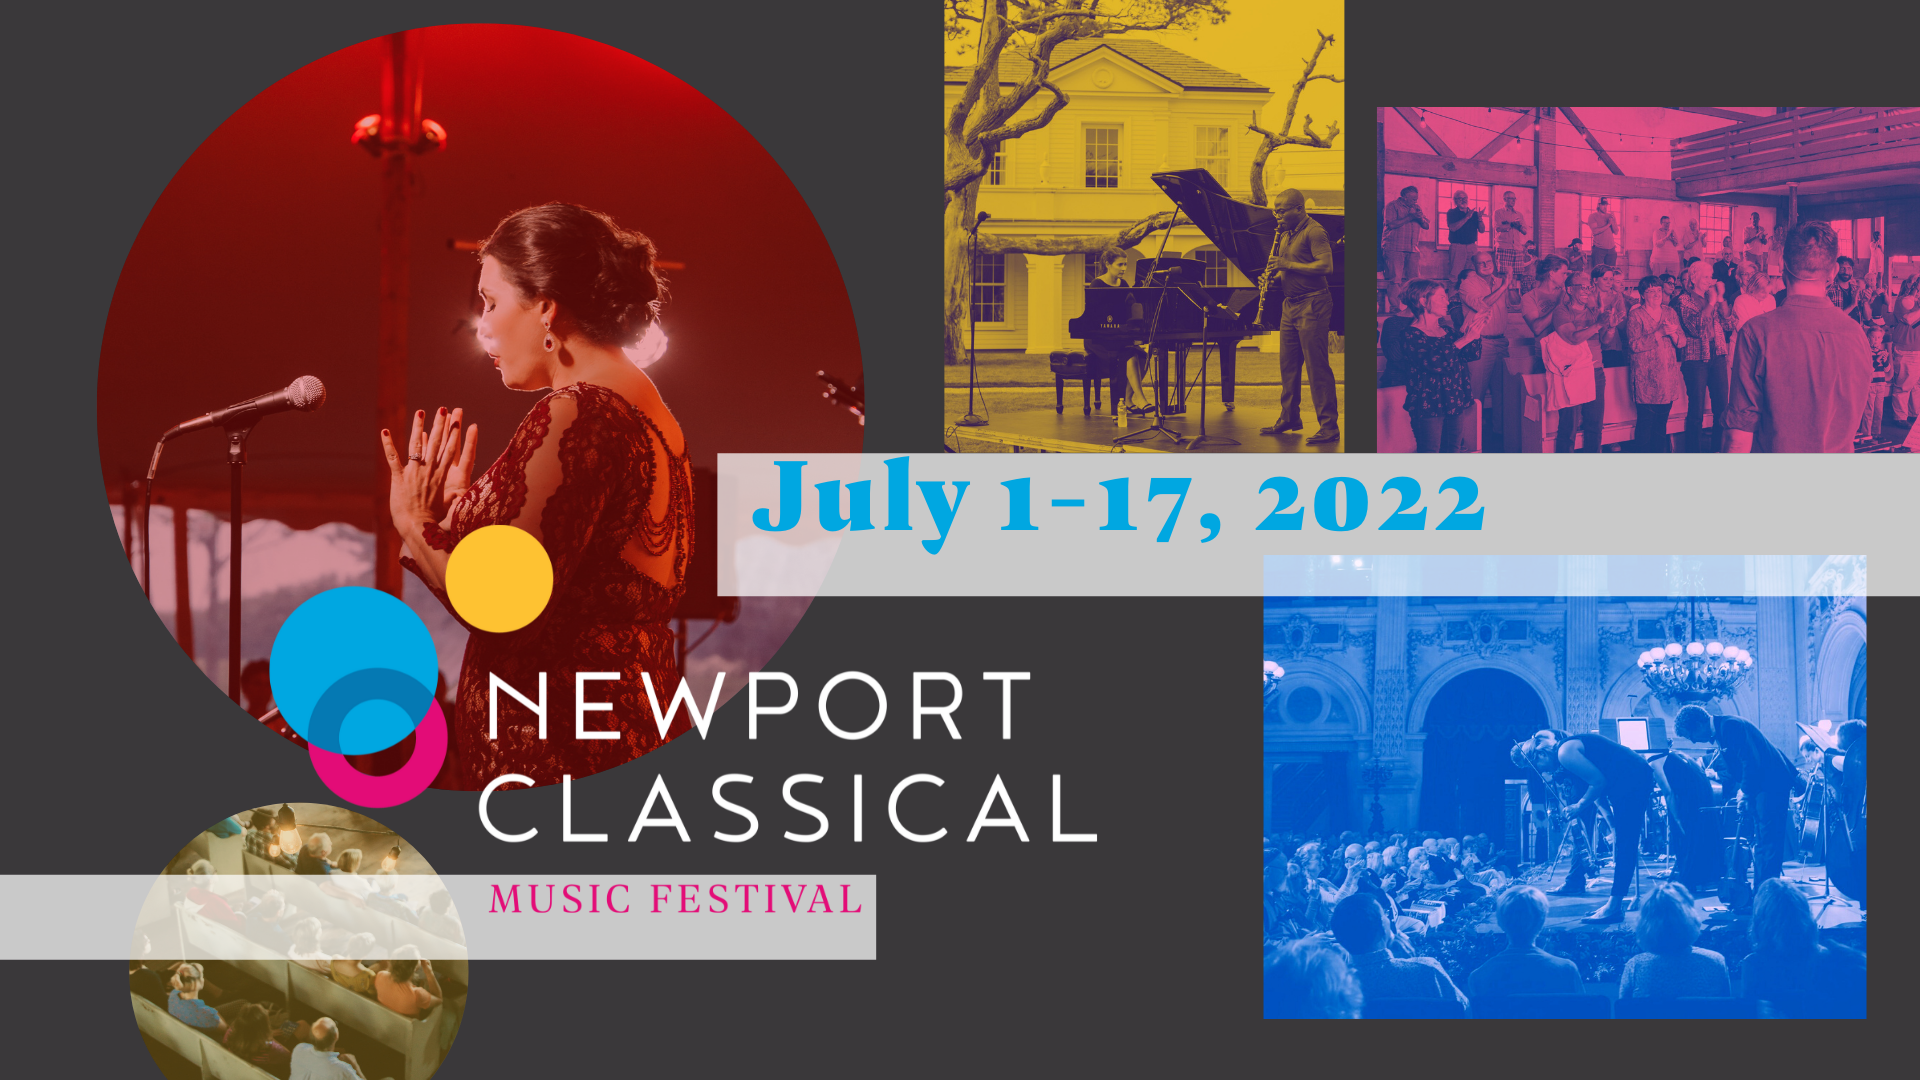 Music Festival Newport Classical